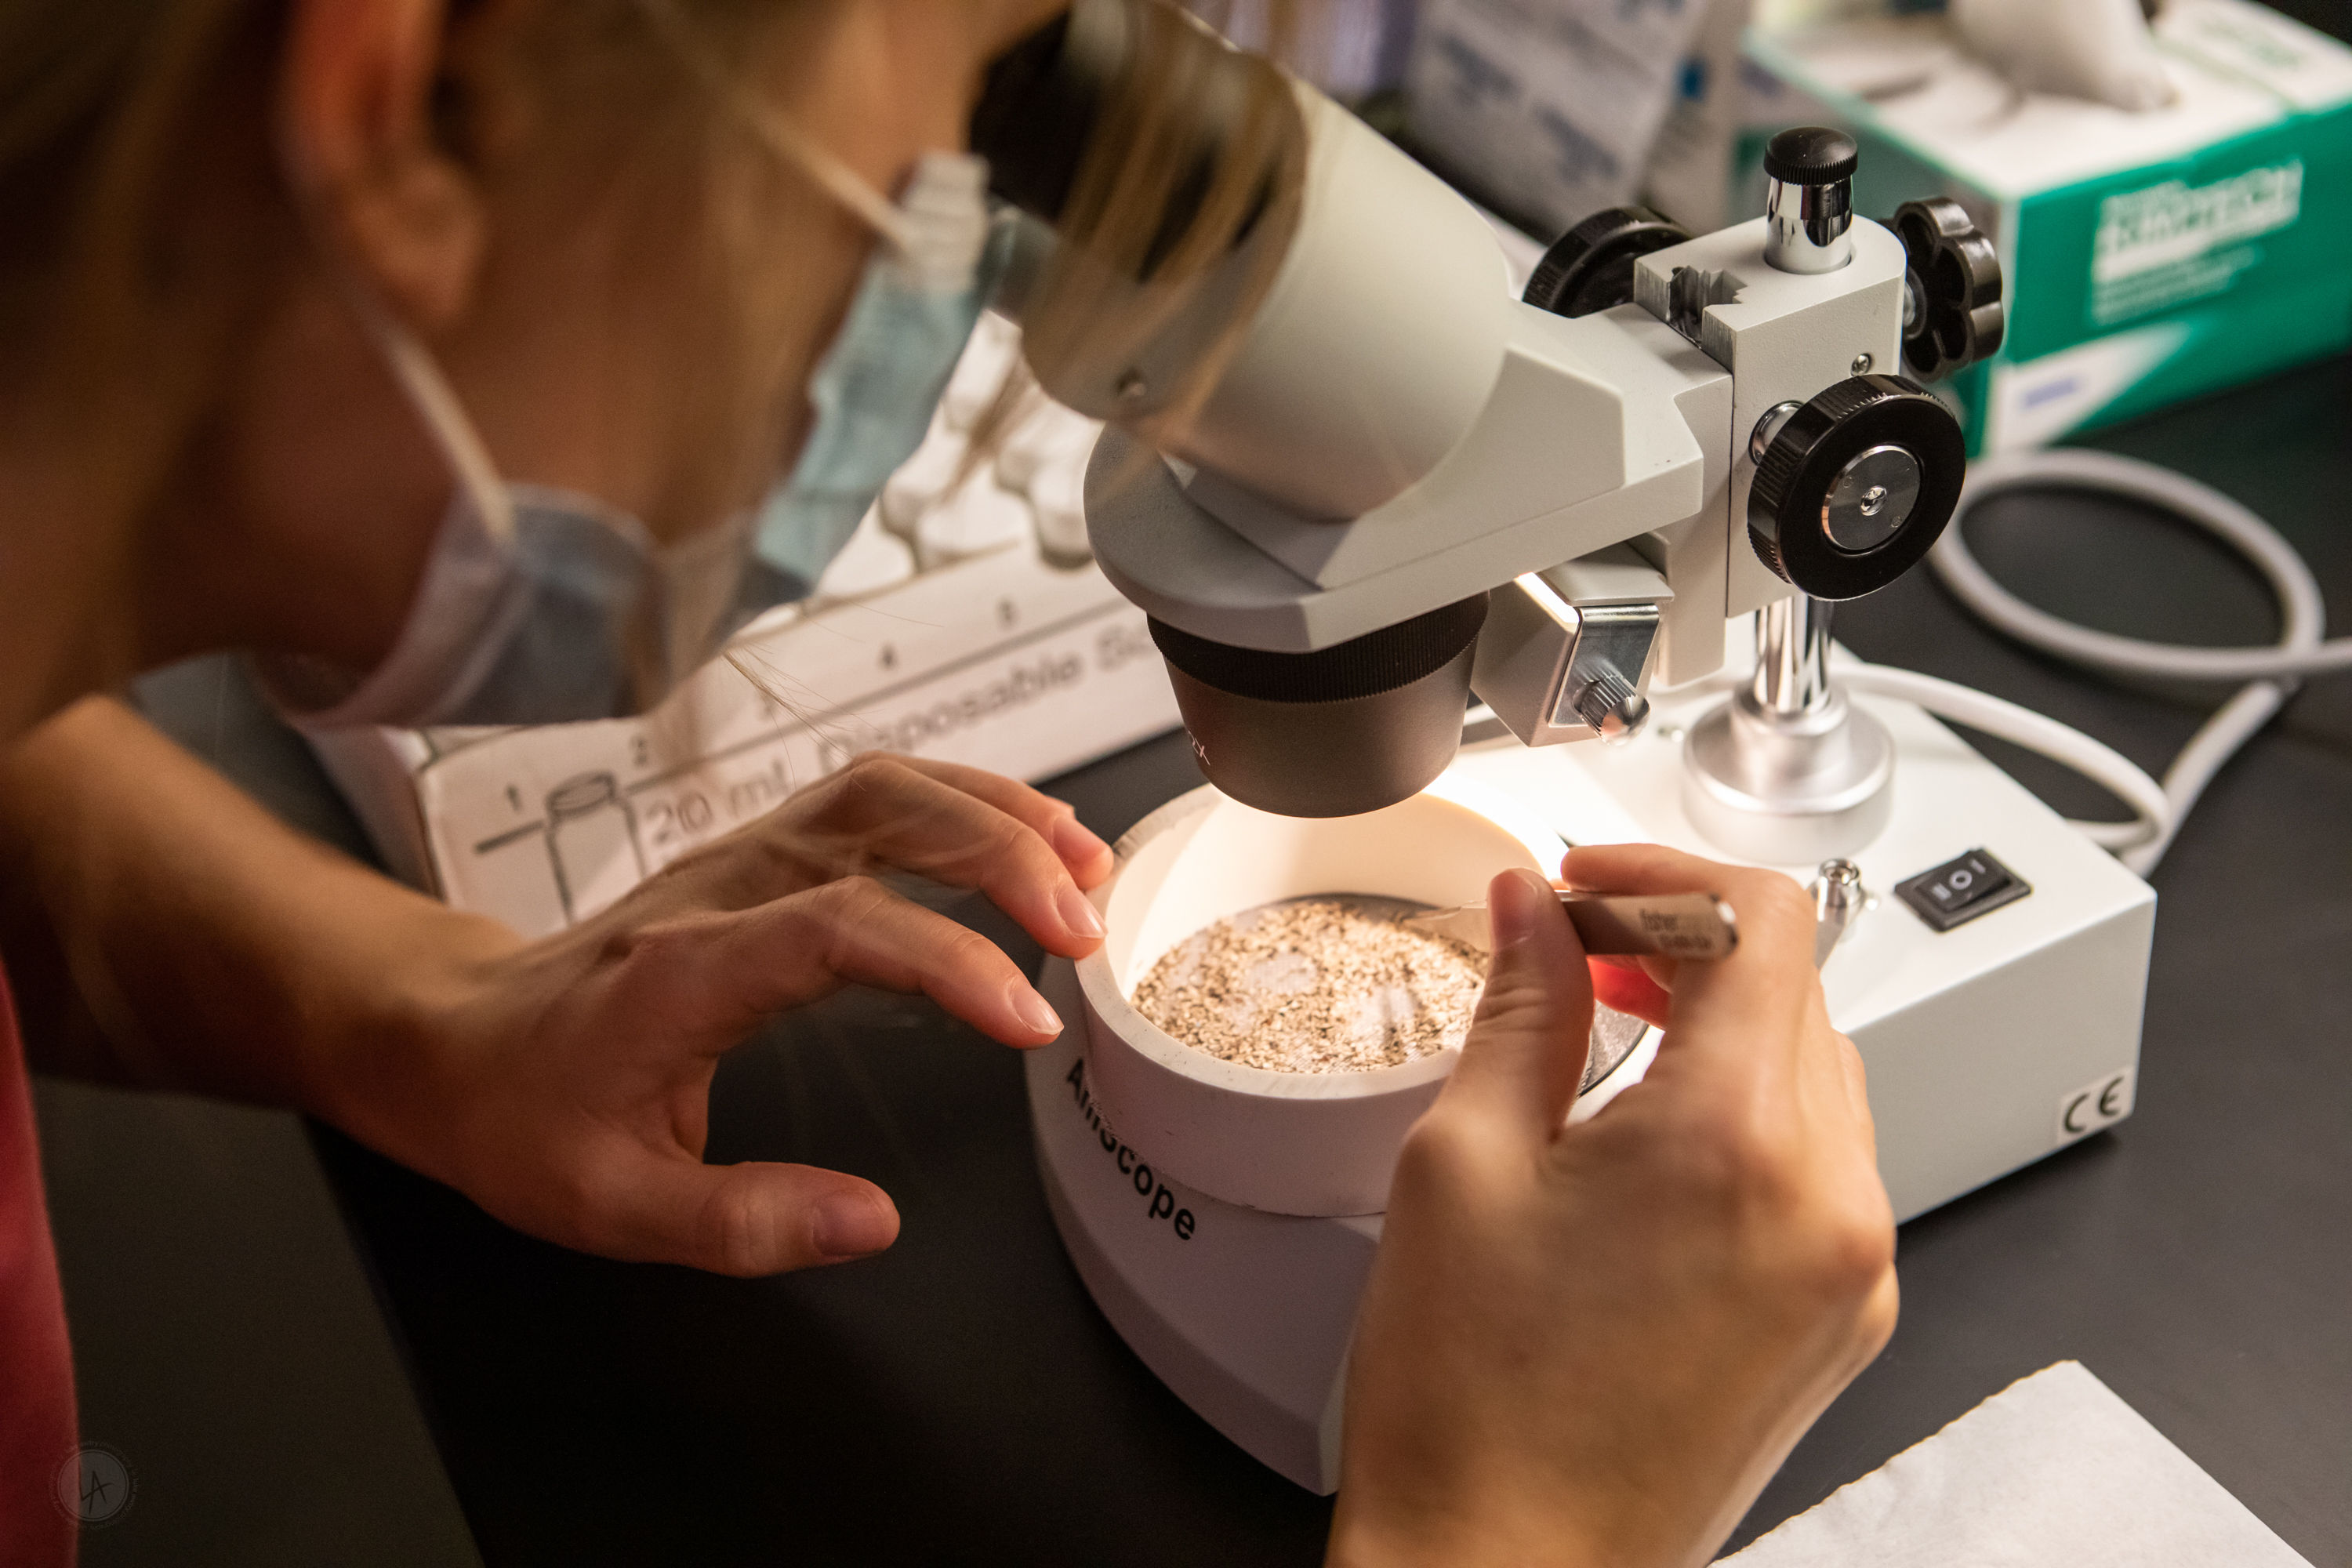 Kate Porterfield inspecting micro plastics under a microscope by Luke Awry